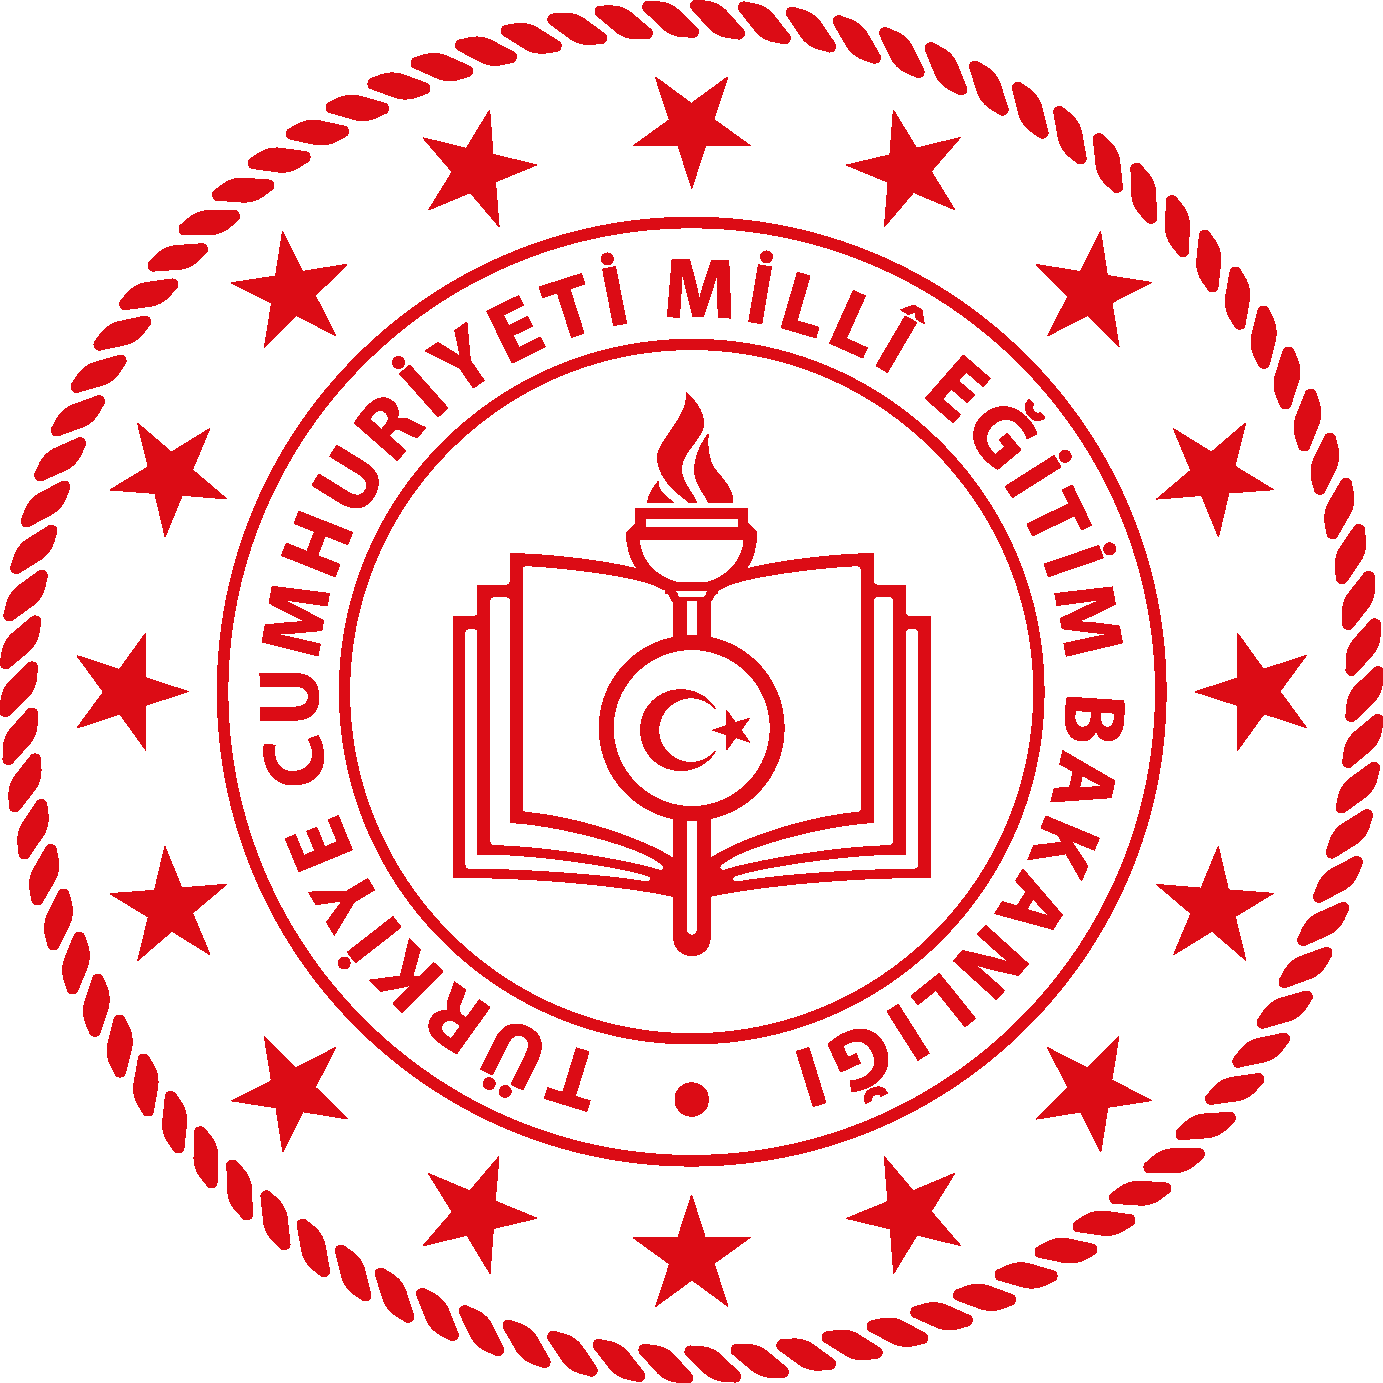 MEB Logo ve Amblem (Milli Eğitim Bakanlığı) meb.gov.tr image.